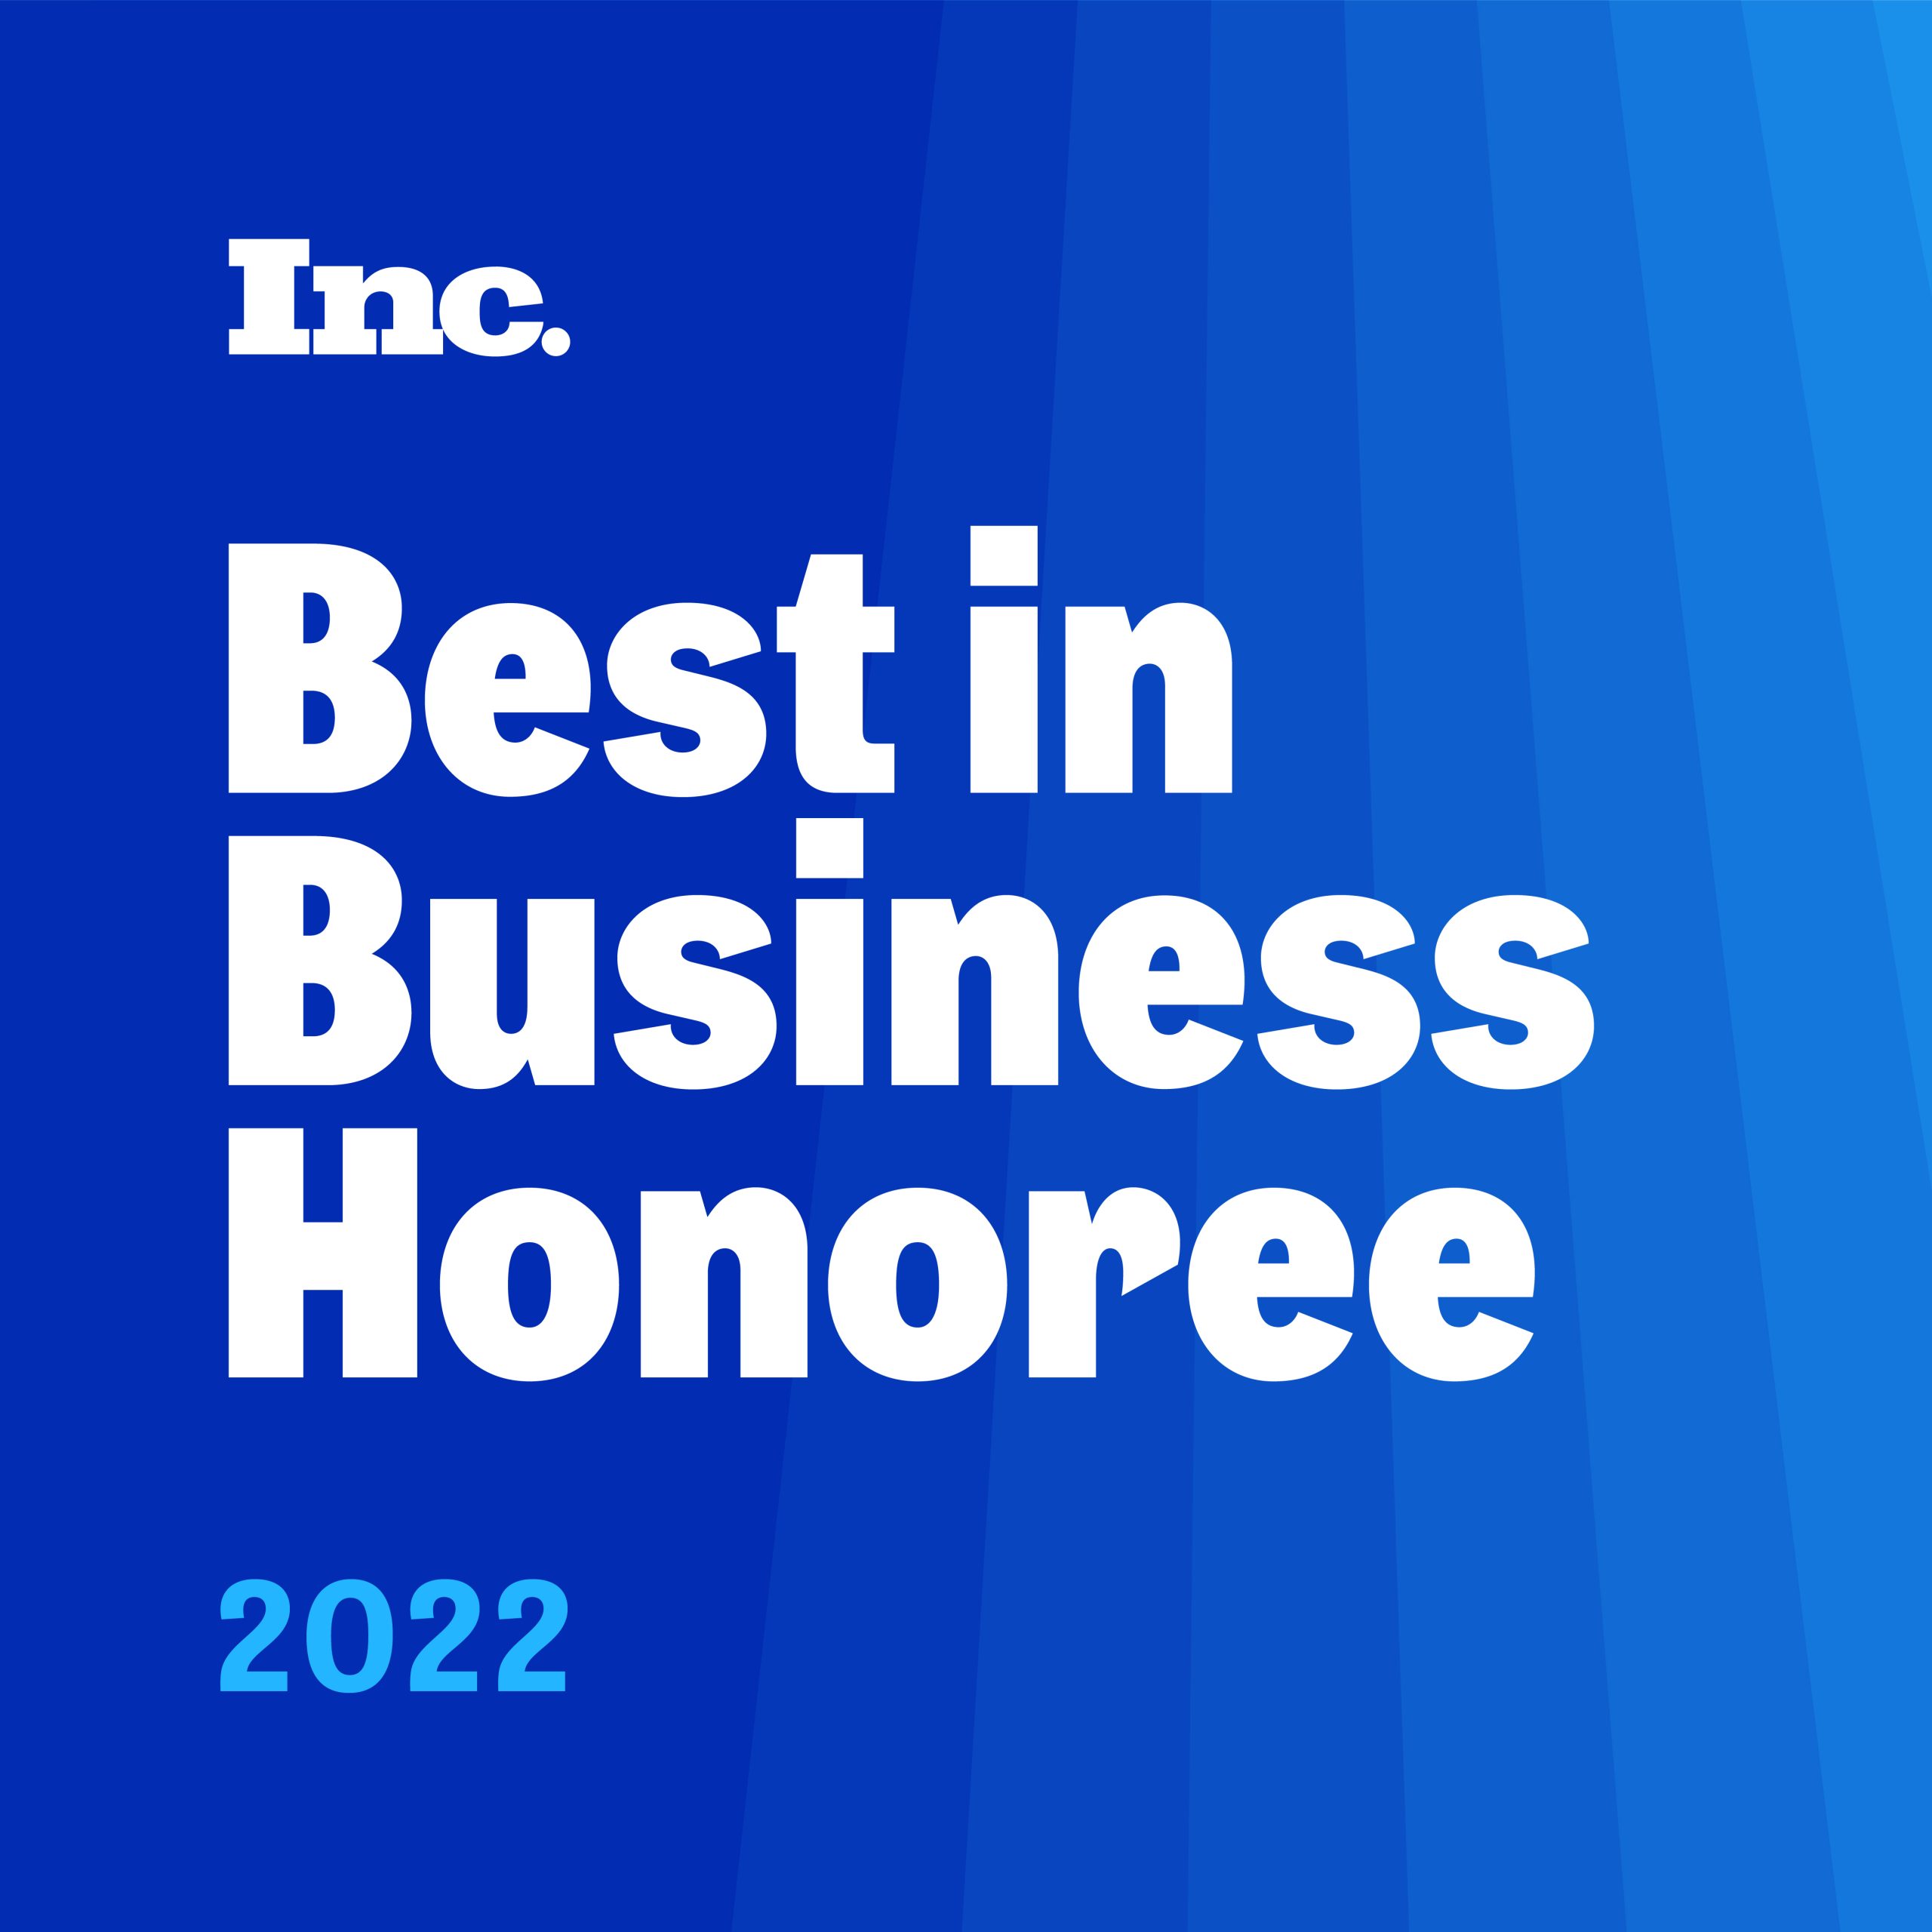 Inc Best in business award 2022, logo